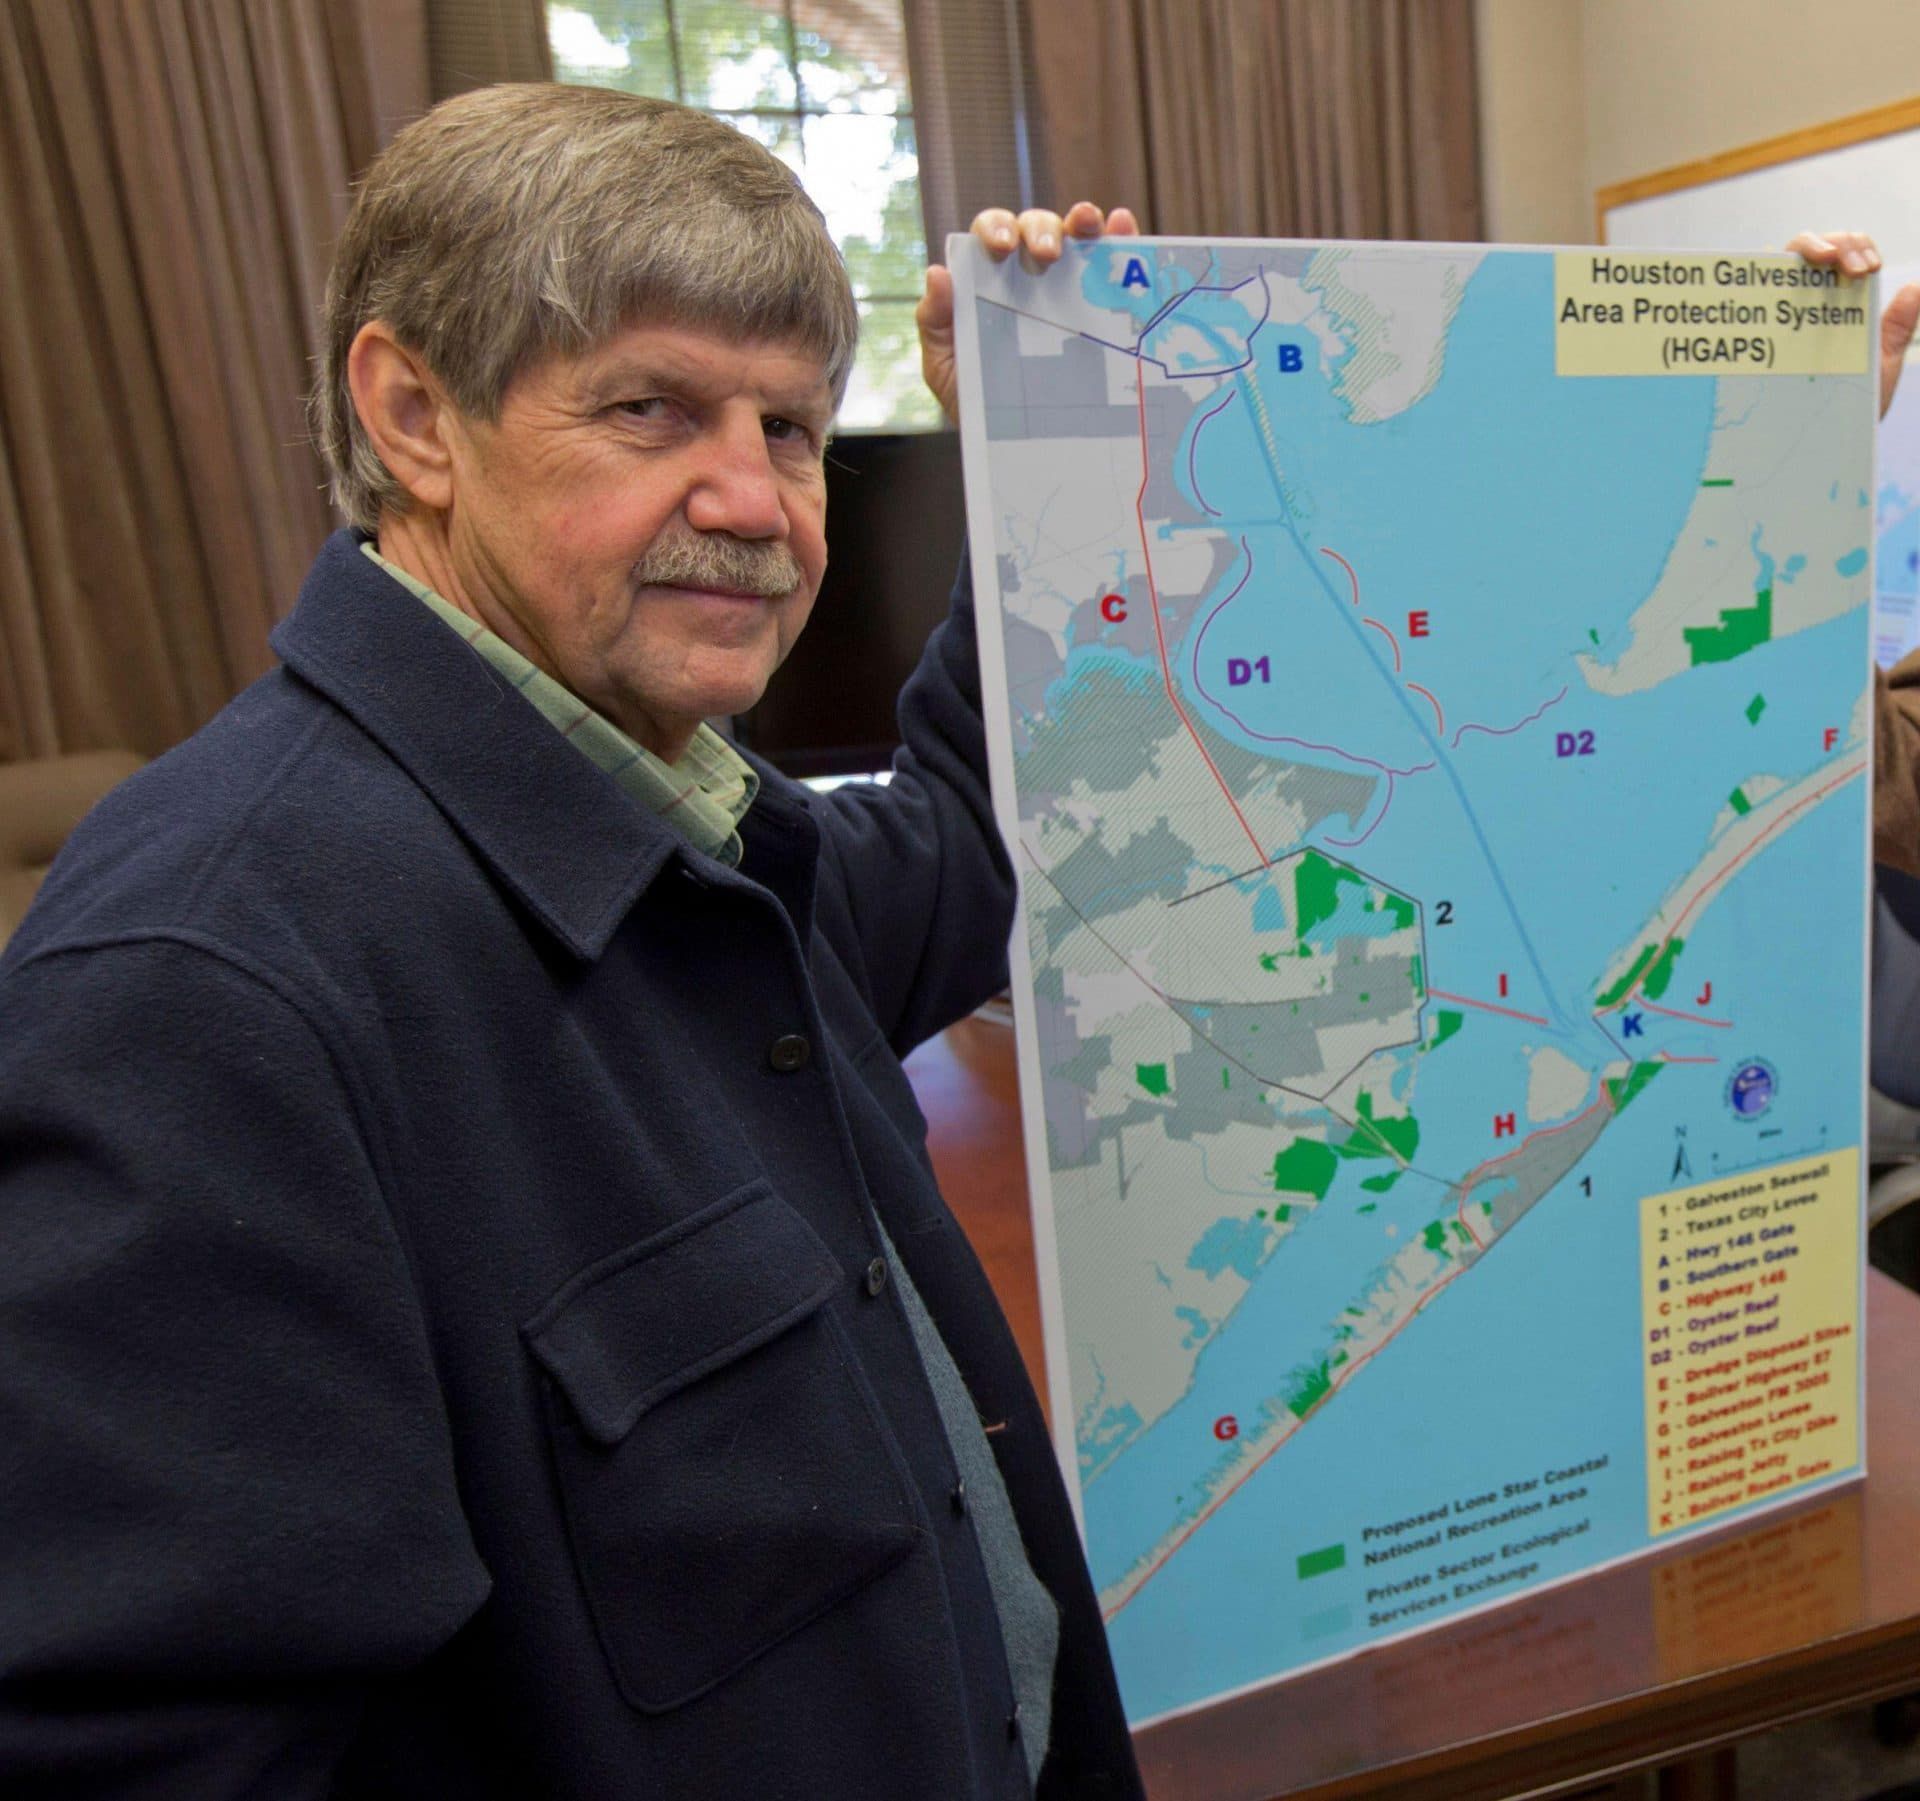 Jim Blackburn, professor of Environmental Law at Rice University poses with a Houston Galveston Area Protection System (HGAPS) map. (Reuters/Richard Carson)